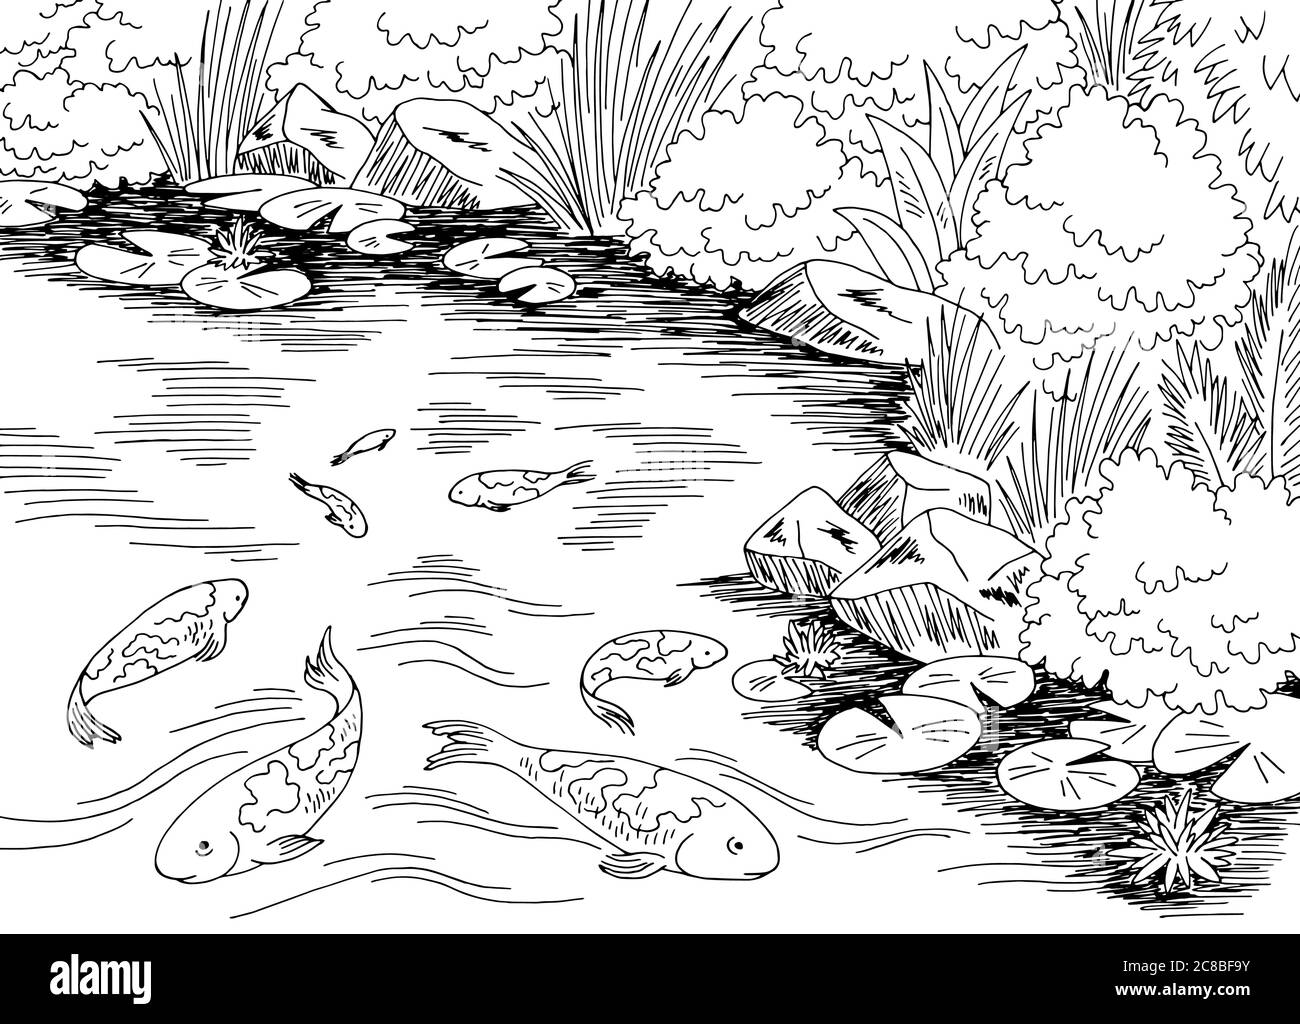 Pond koi carp fish graphic black white landscape sketch illustration vector Stock Vector